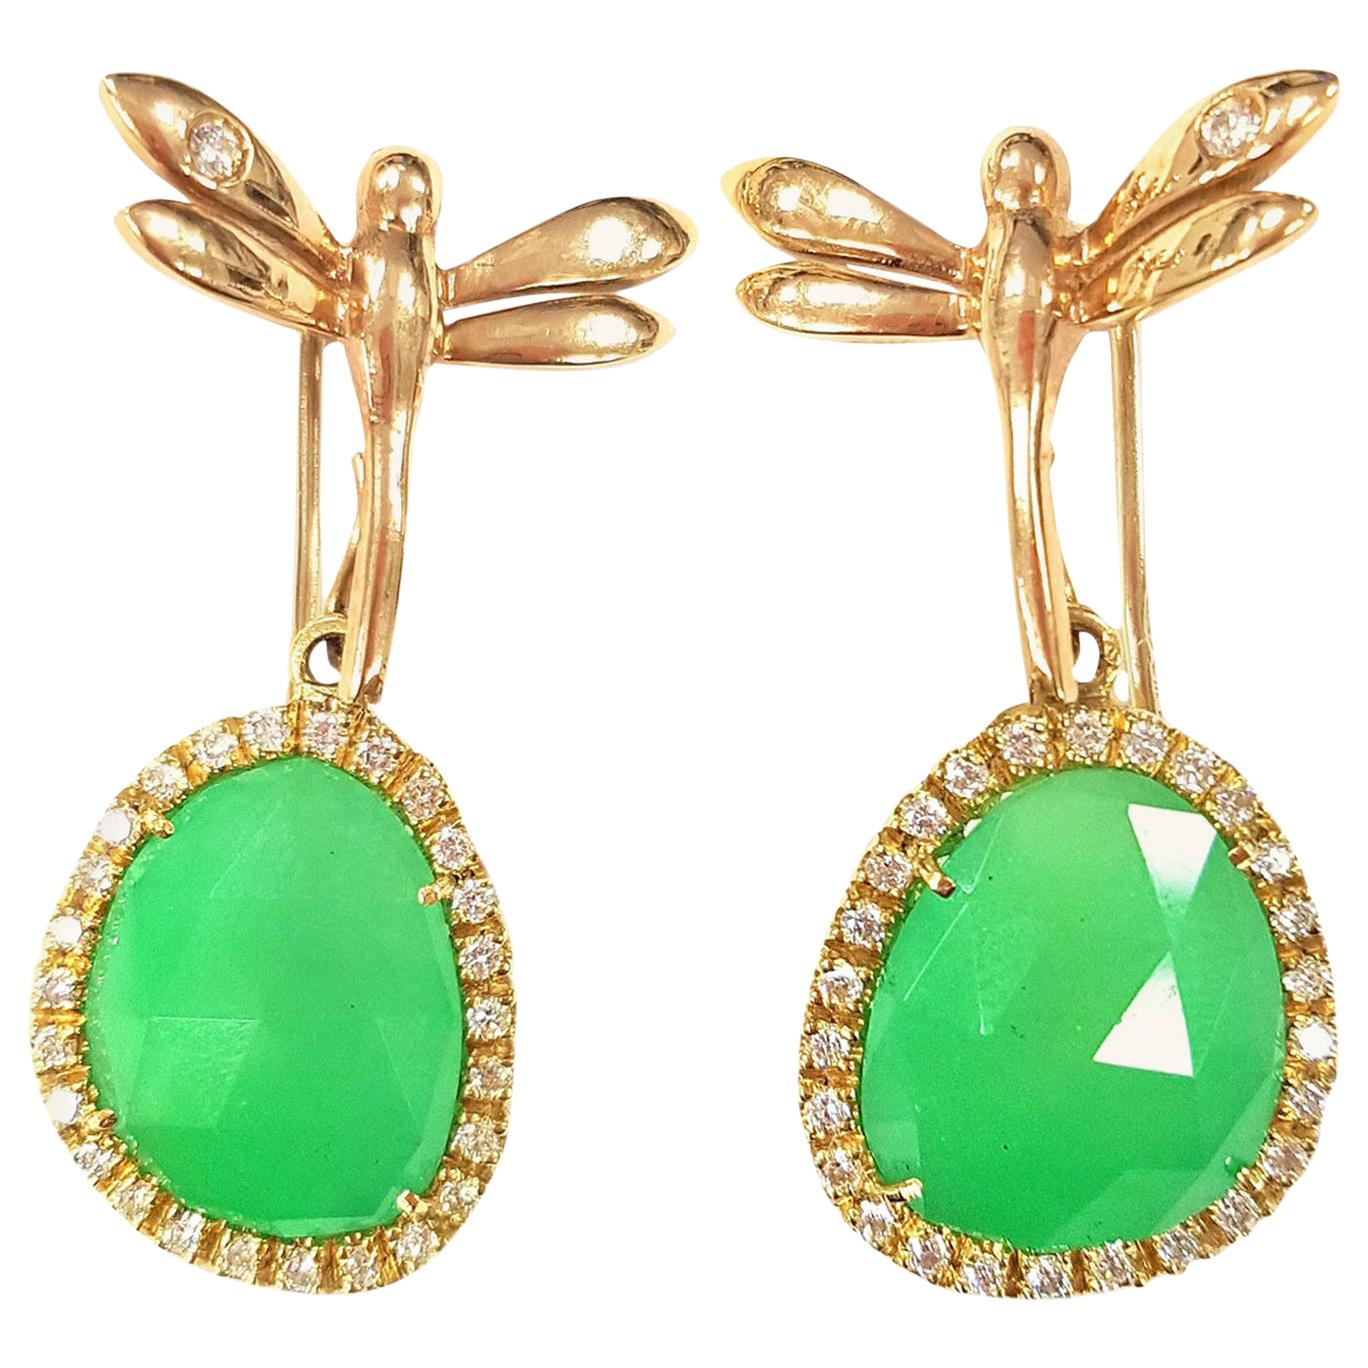 Boucles d'oreilles contemporaines en or 18 carats convertibles en jade brillant avec libellule en vente